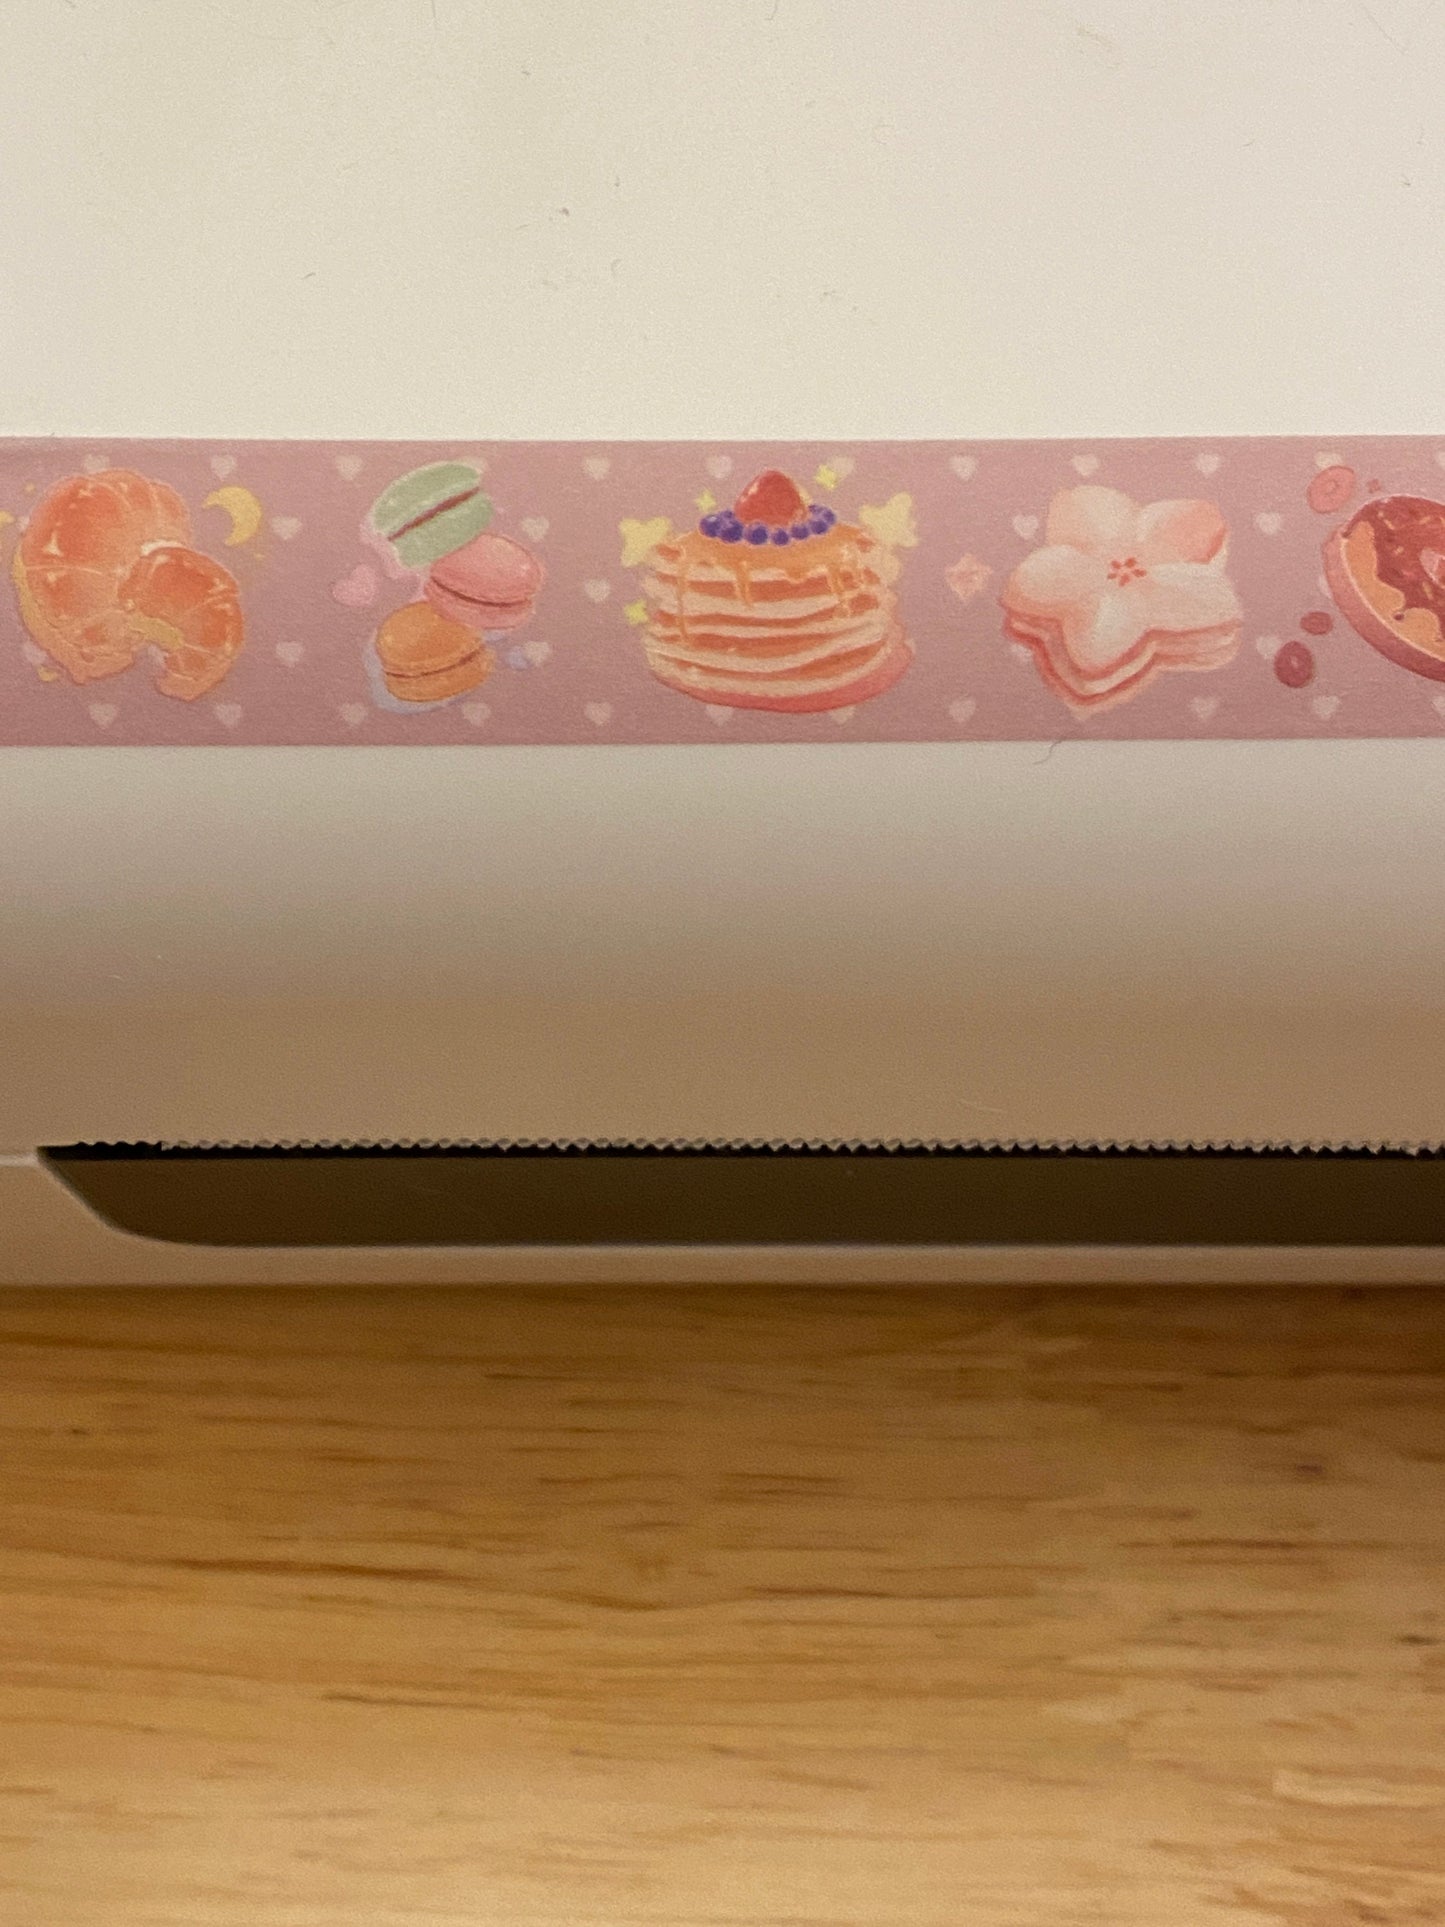 Big Roll of Dessert Washi Tape